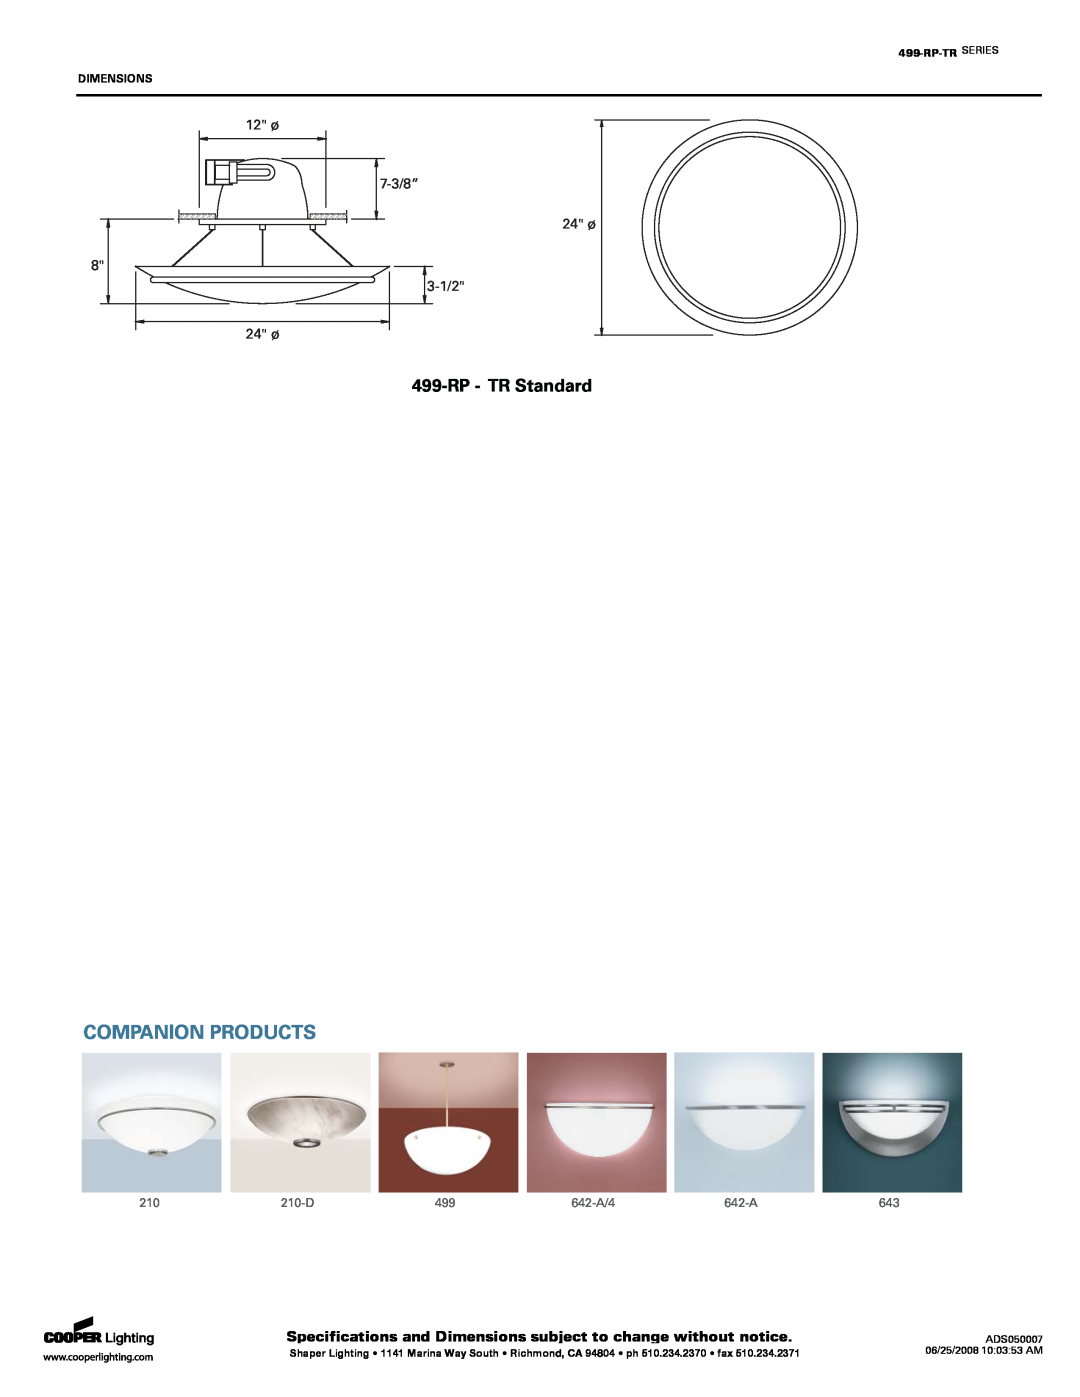 Cooper Lighting 499-RP-TR SERIES Companion Products, RP- TR Standard, 12 ø 7-3/8” 24 ø 3-1/2, Dimensions, 210-D, 642-A/4 